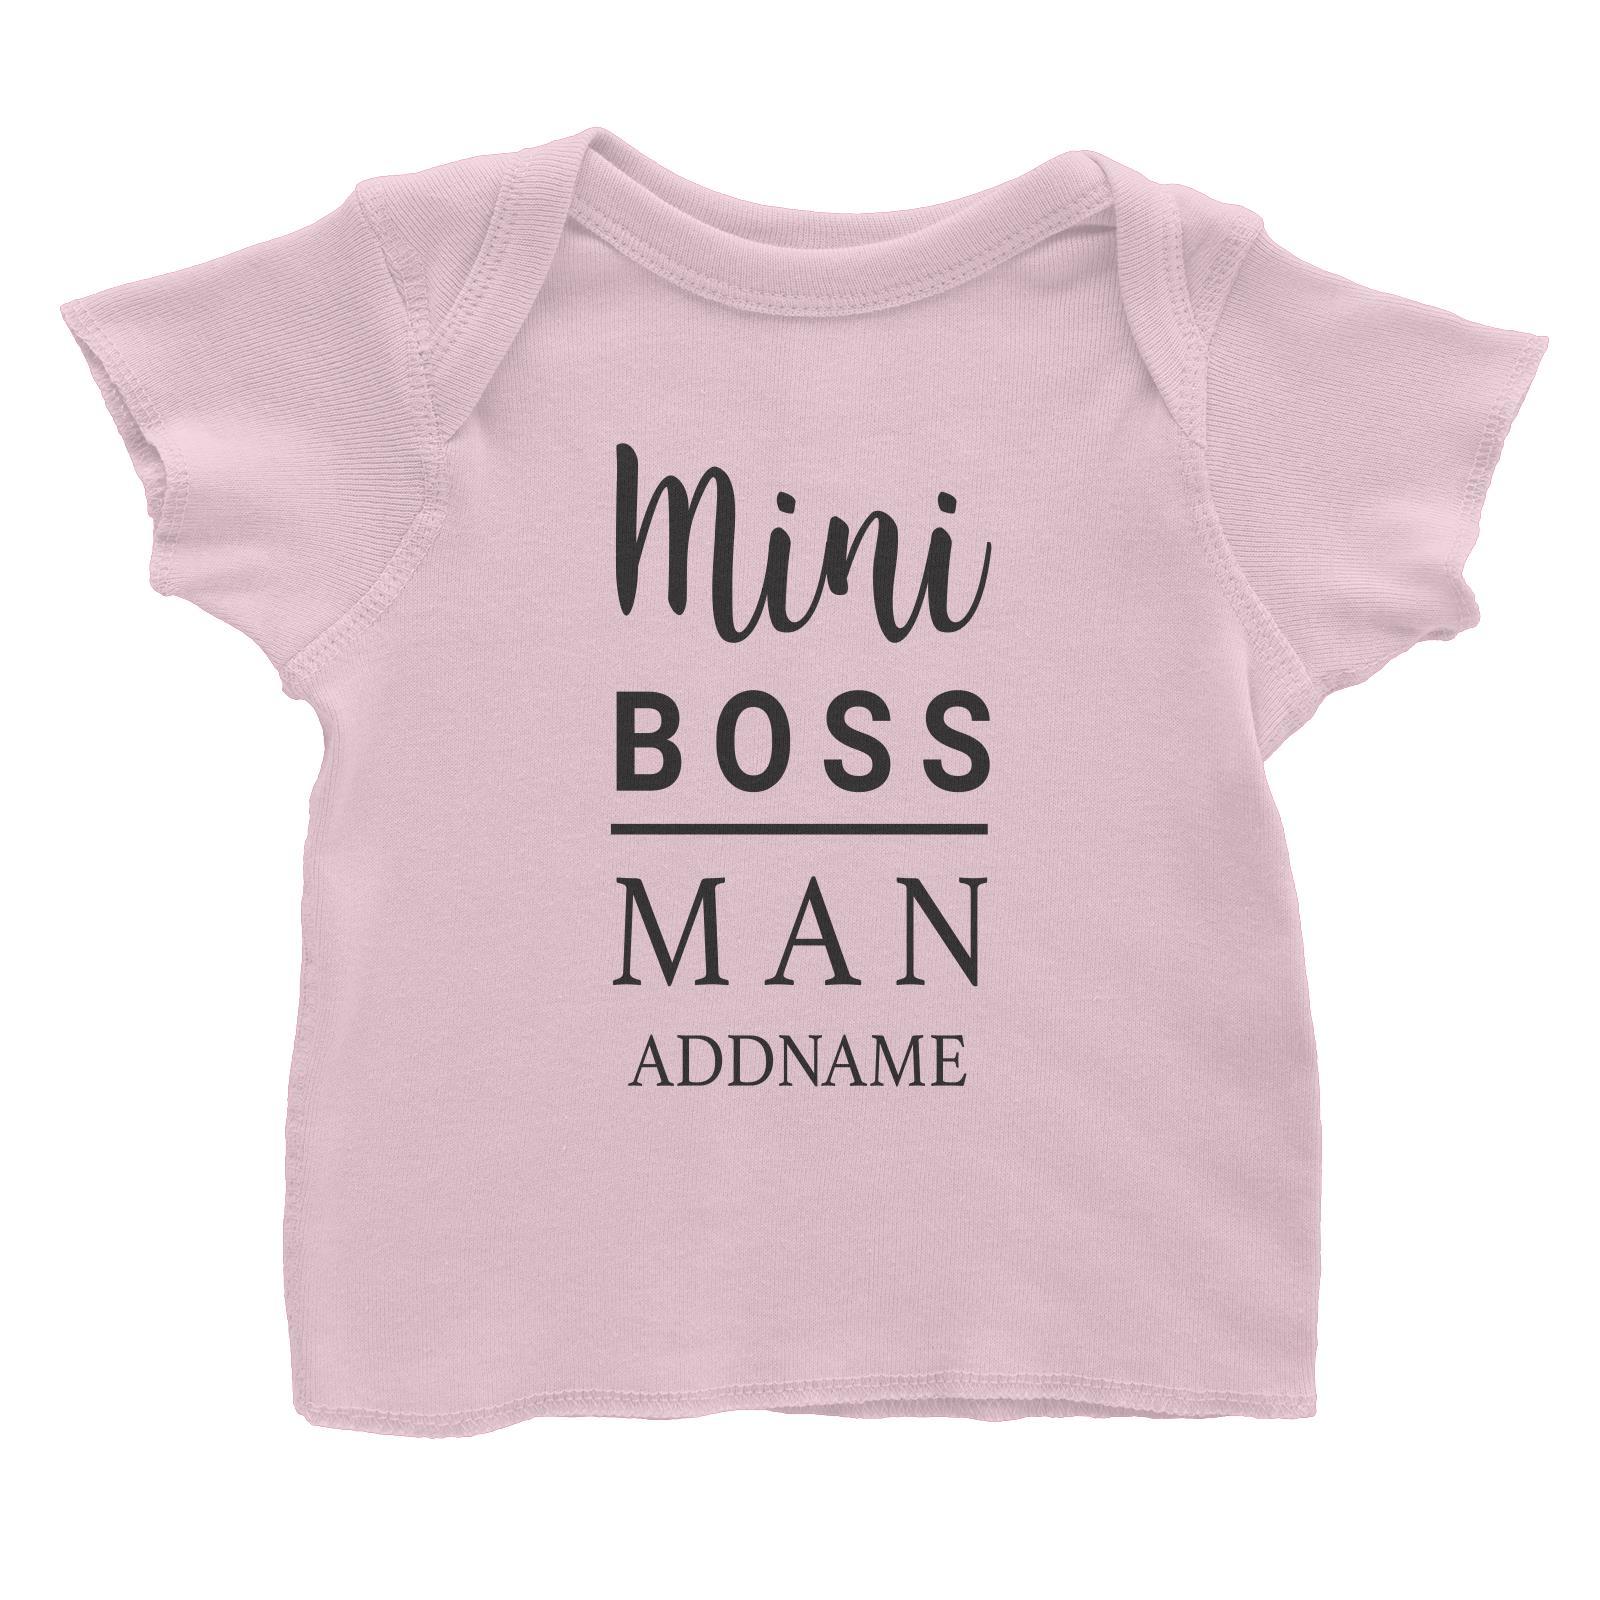 Mini Boss Man Addname Baby T-Shirt  Matching Family Personalizable Designs